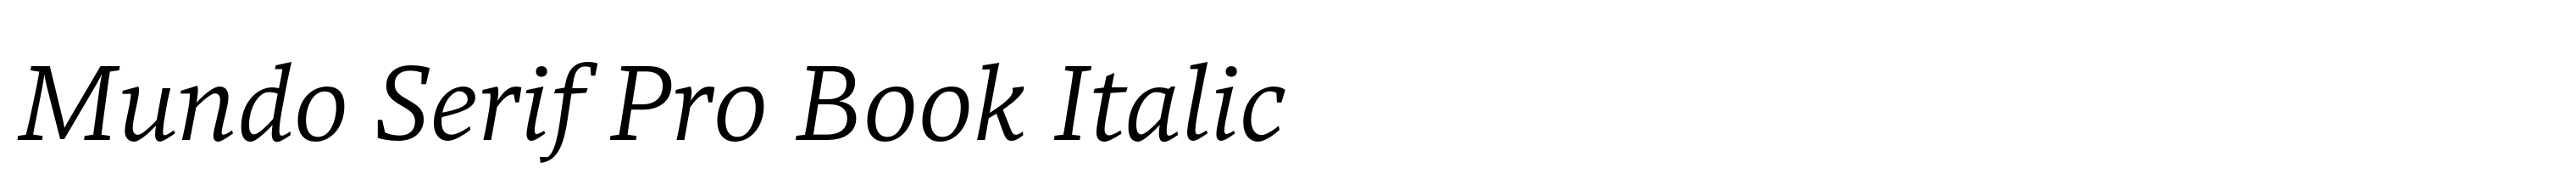 Mundo Serif Pro Book Italic